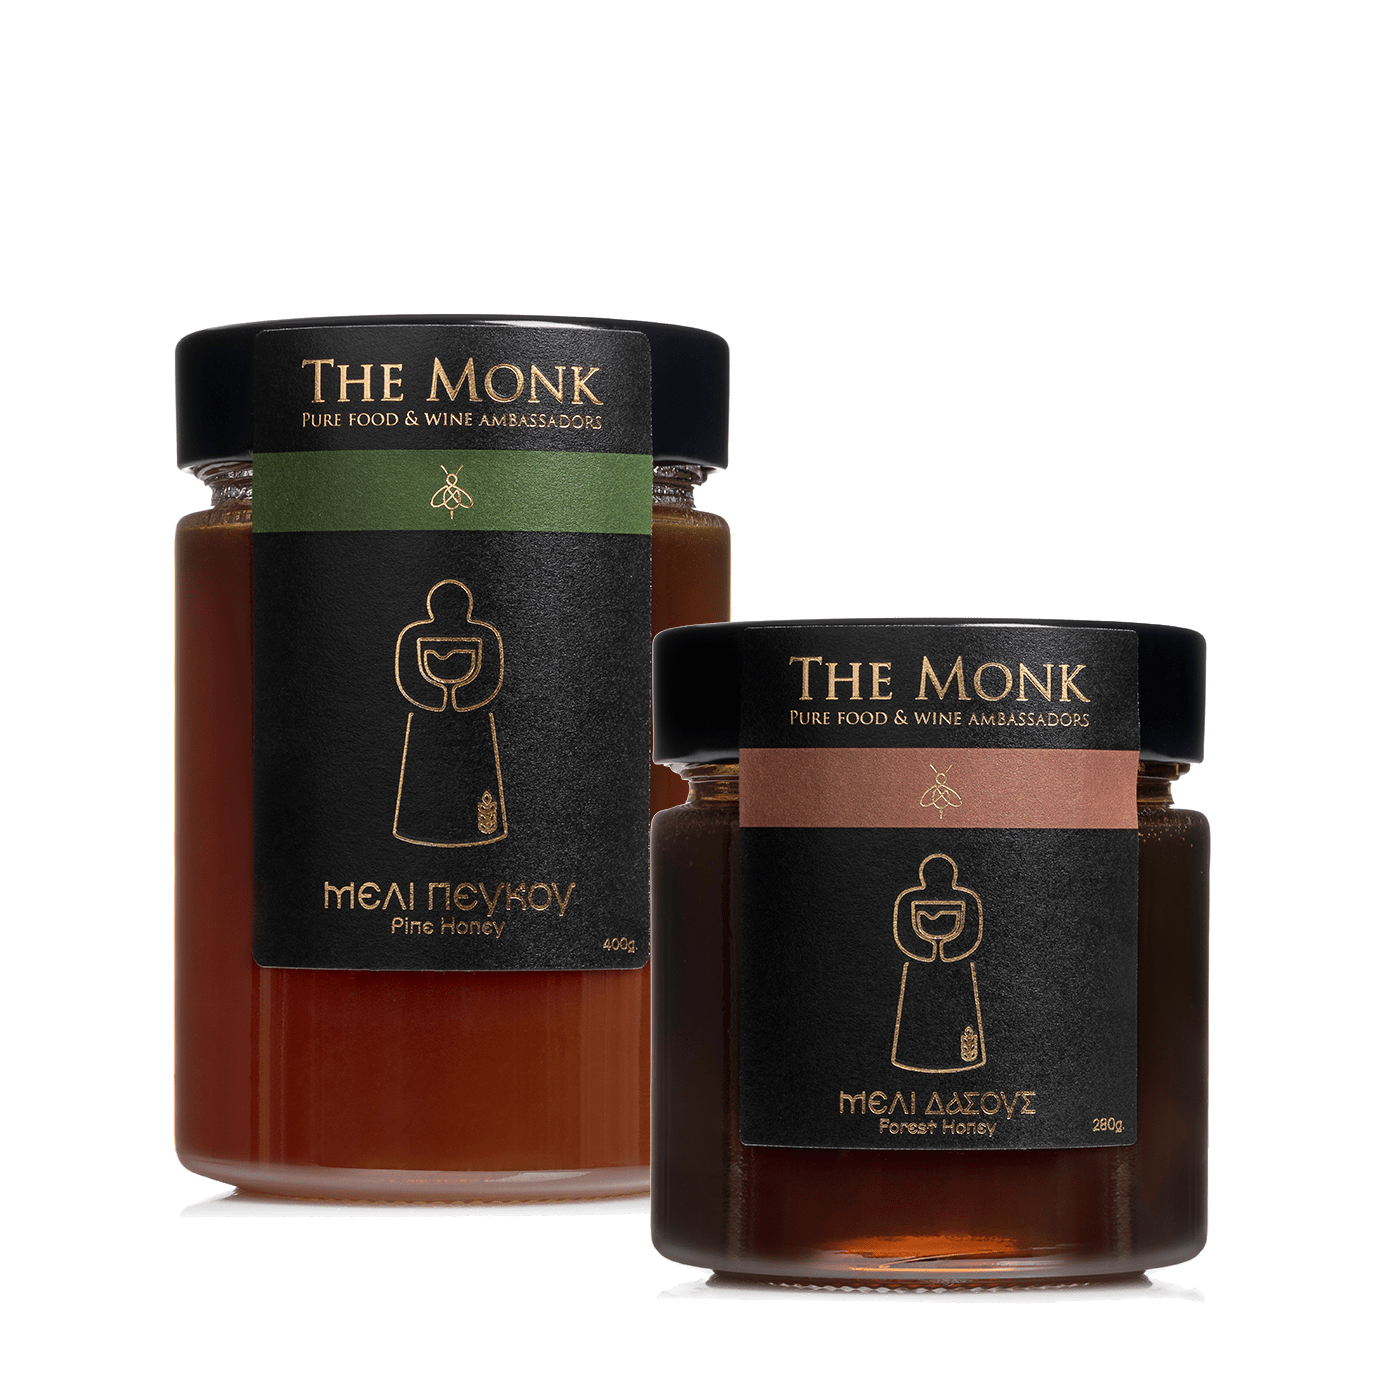 Pine & Forest Honey